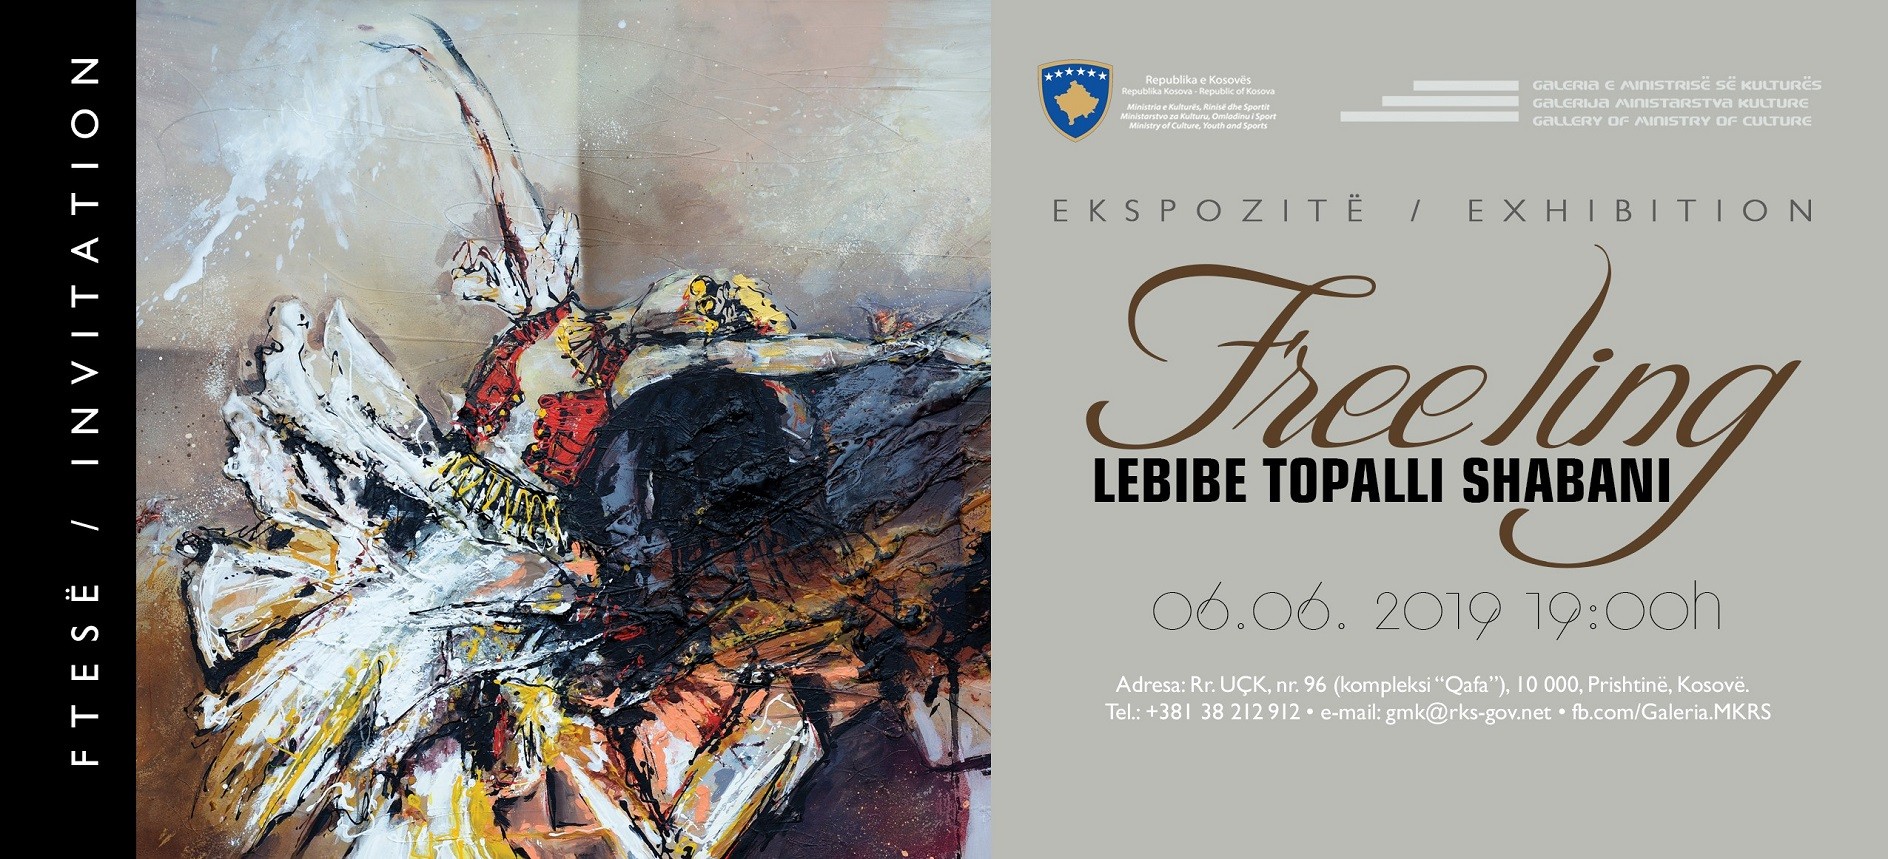 Lebibe Topalli-Shabani hap ekspozitën “Freeling”  